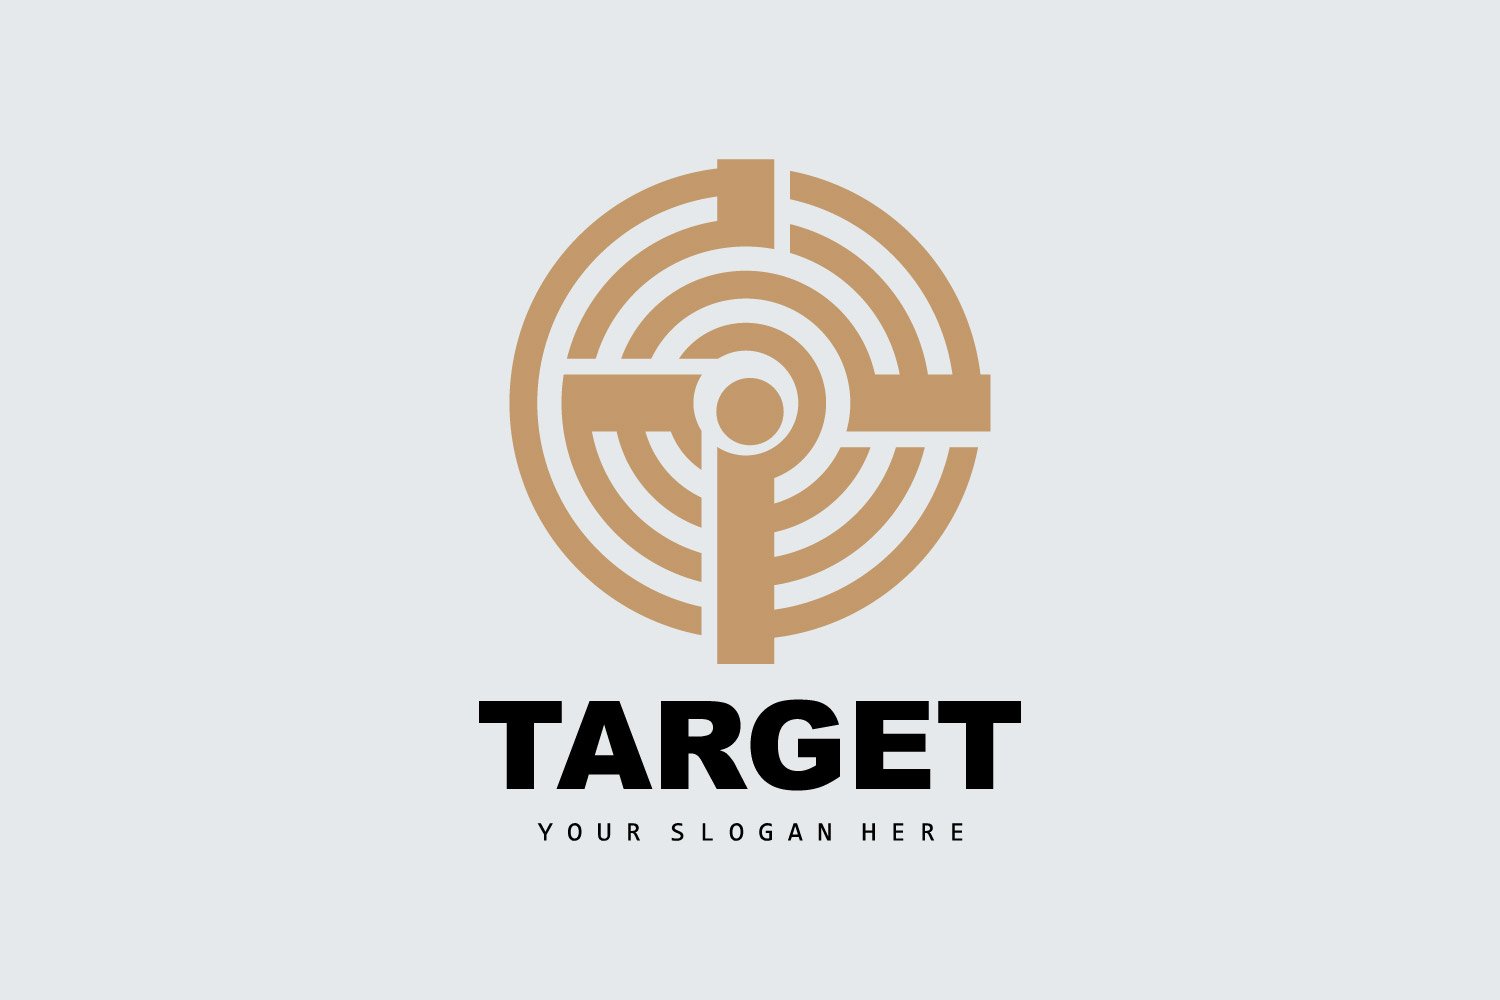 Template #405724 Vector Target Webdesign Template - Logo template Preview